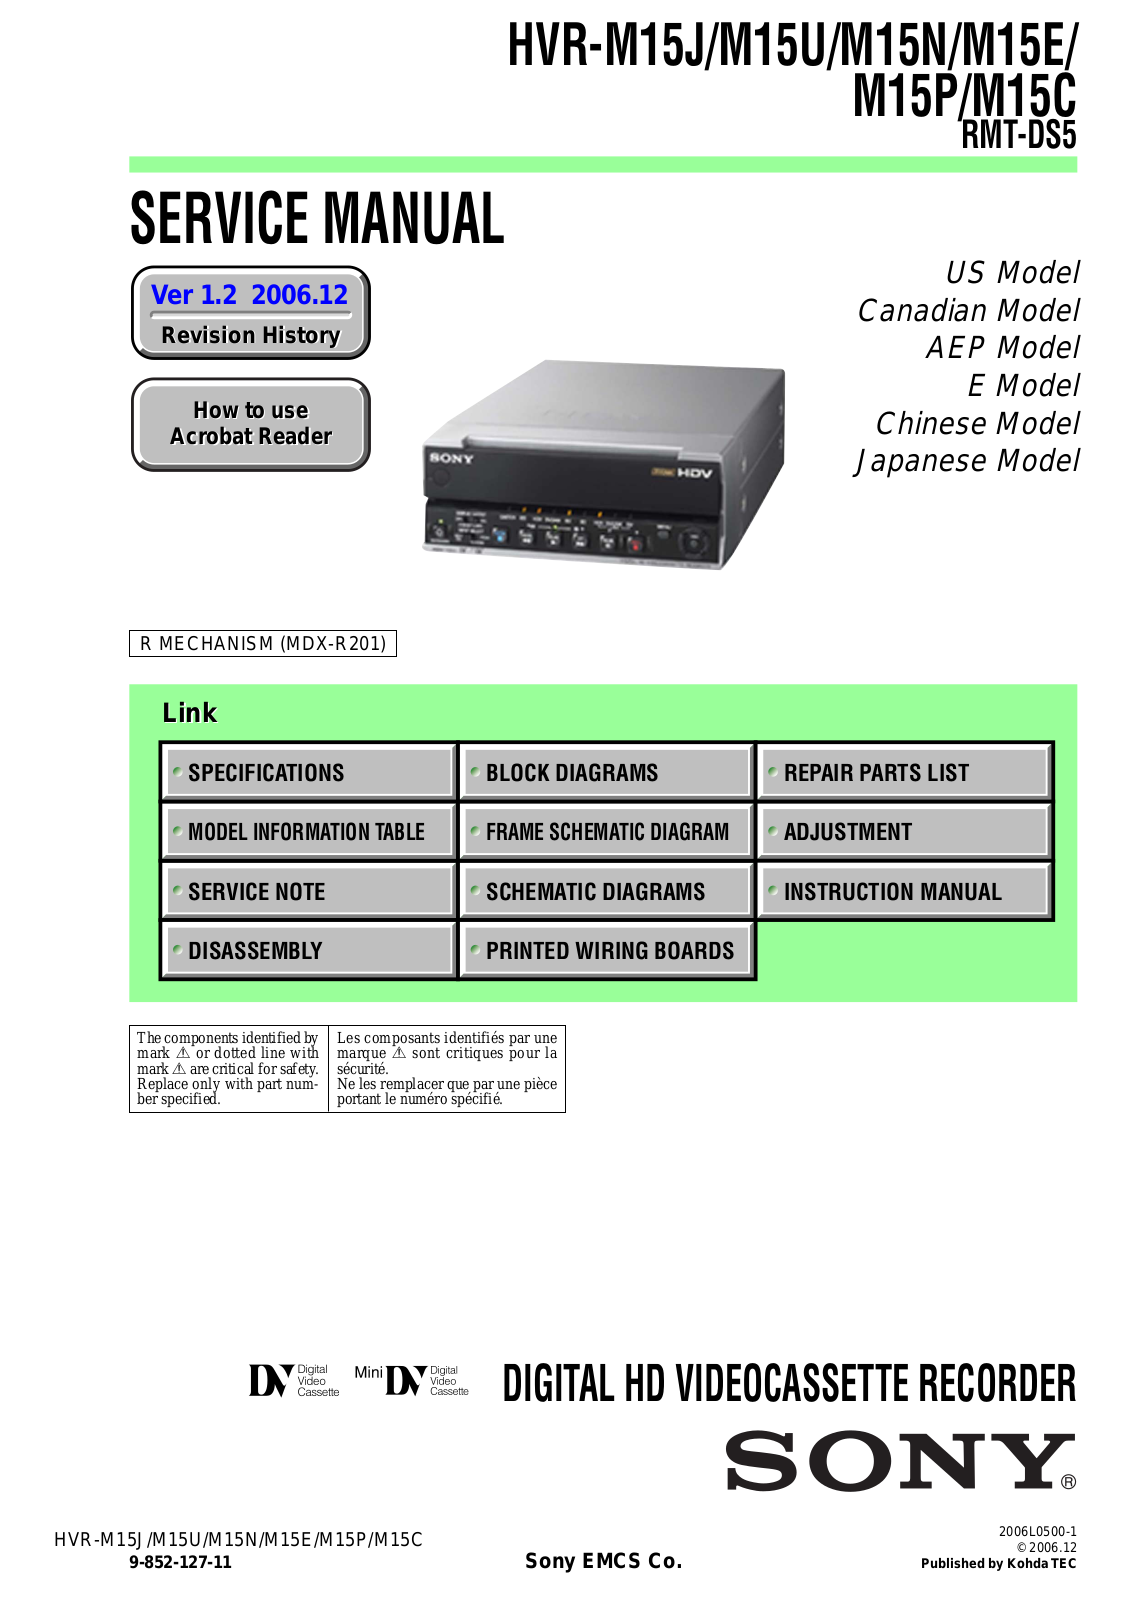 Sony HVR-M15J, HVR-M15U, HVR-M15N Service Manual